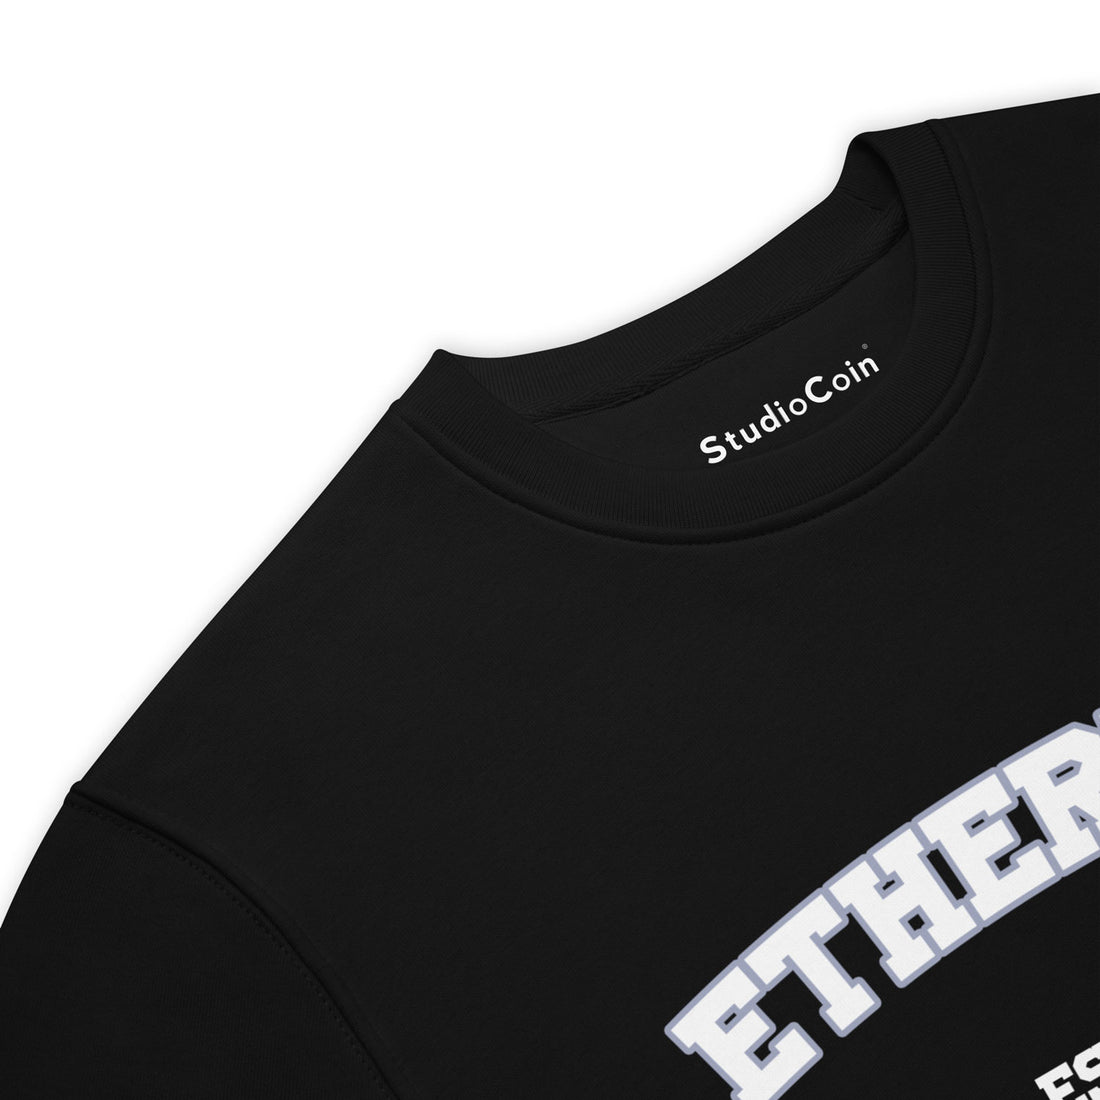 eth ethereum university crewneck sweatshirt merch